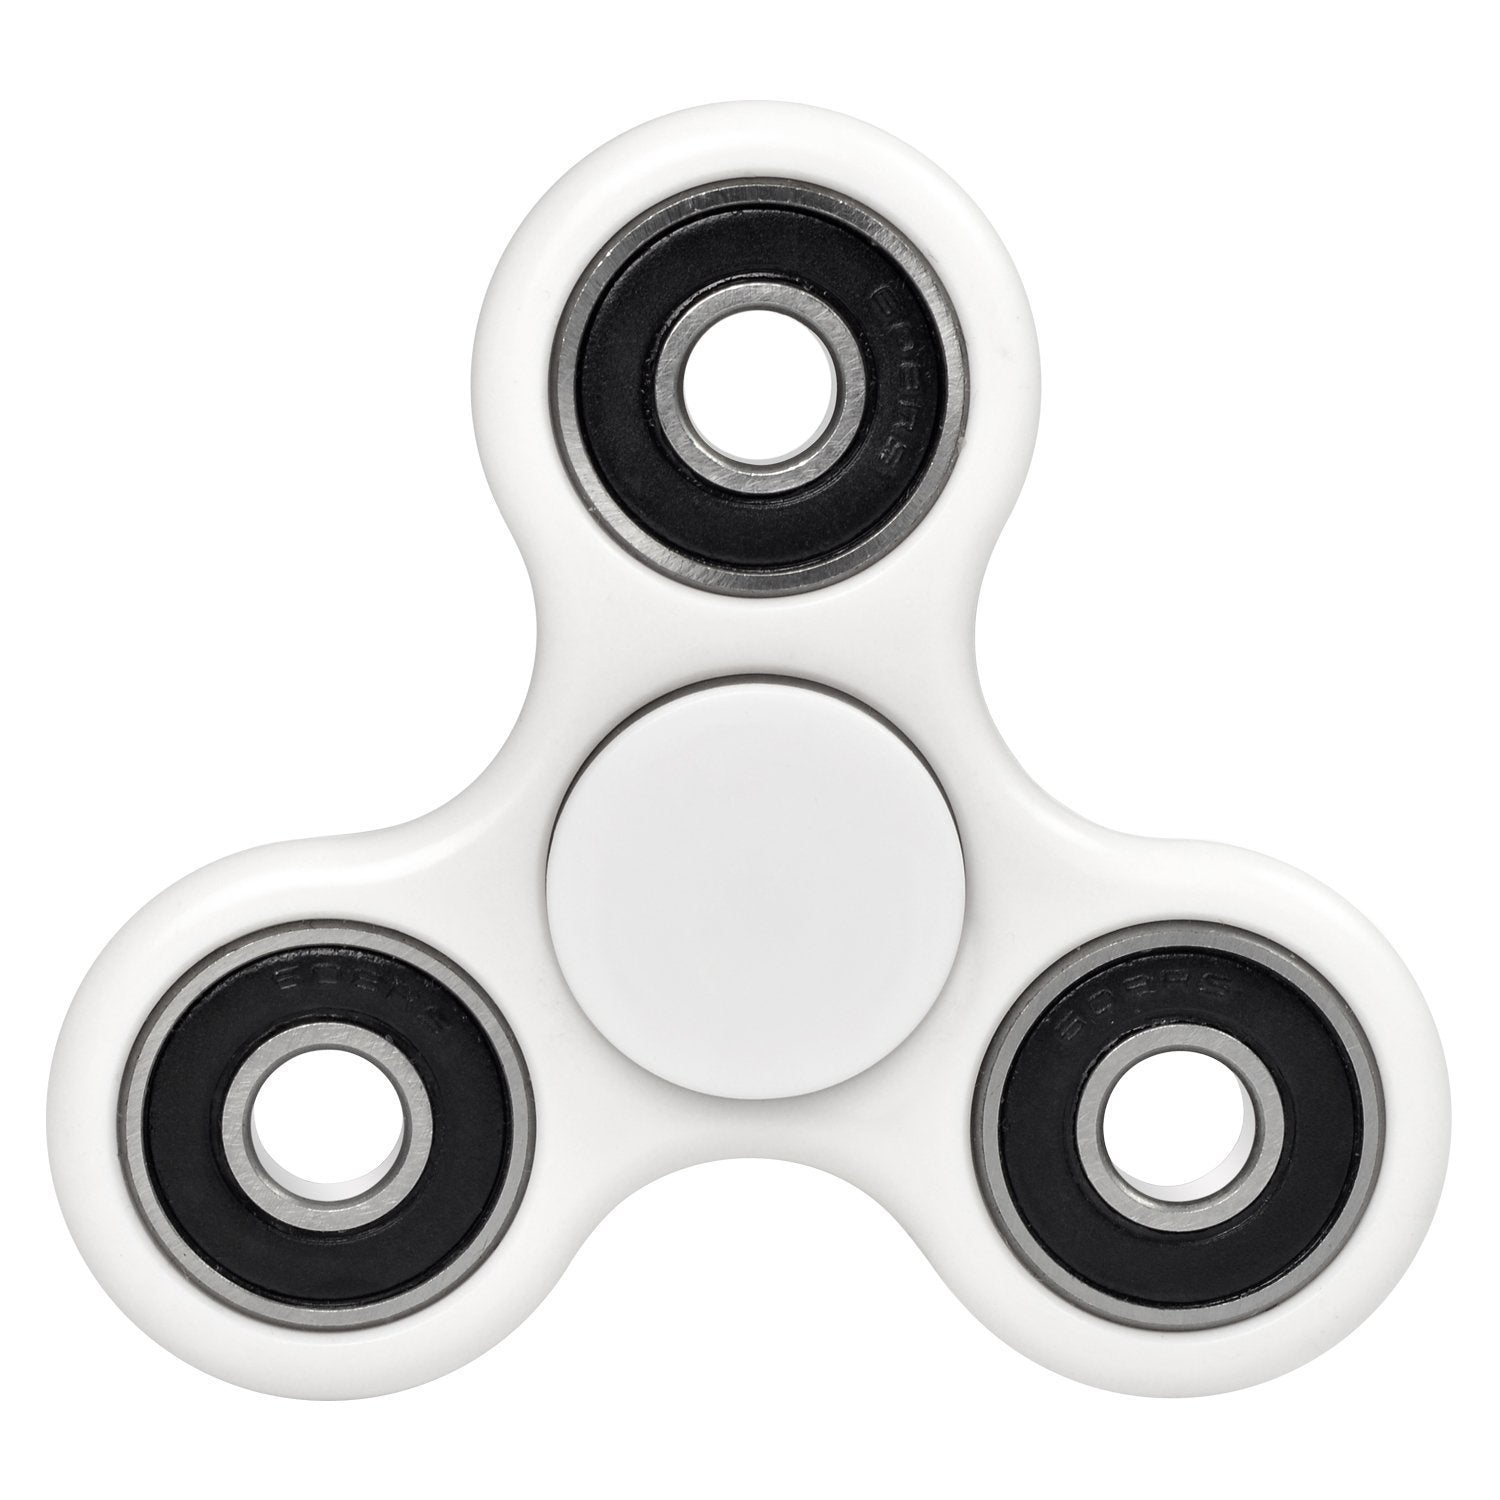 LUVVITT Fidget Spinner Premium Toy for Stress Relief and Focus - White